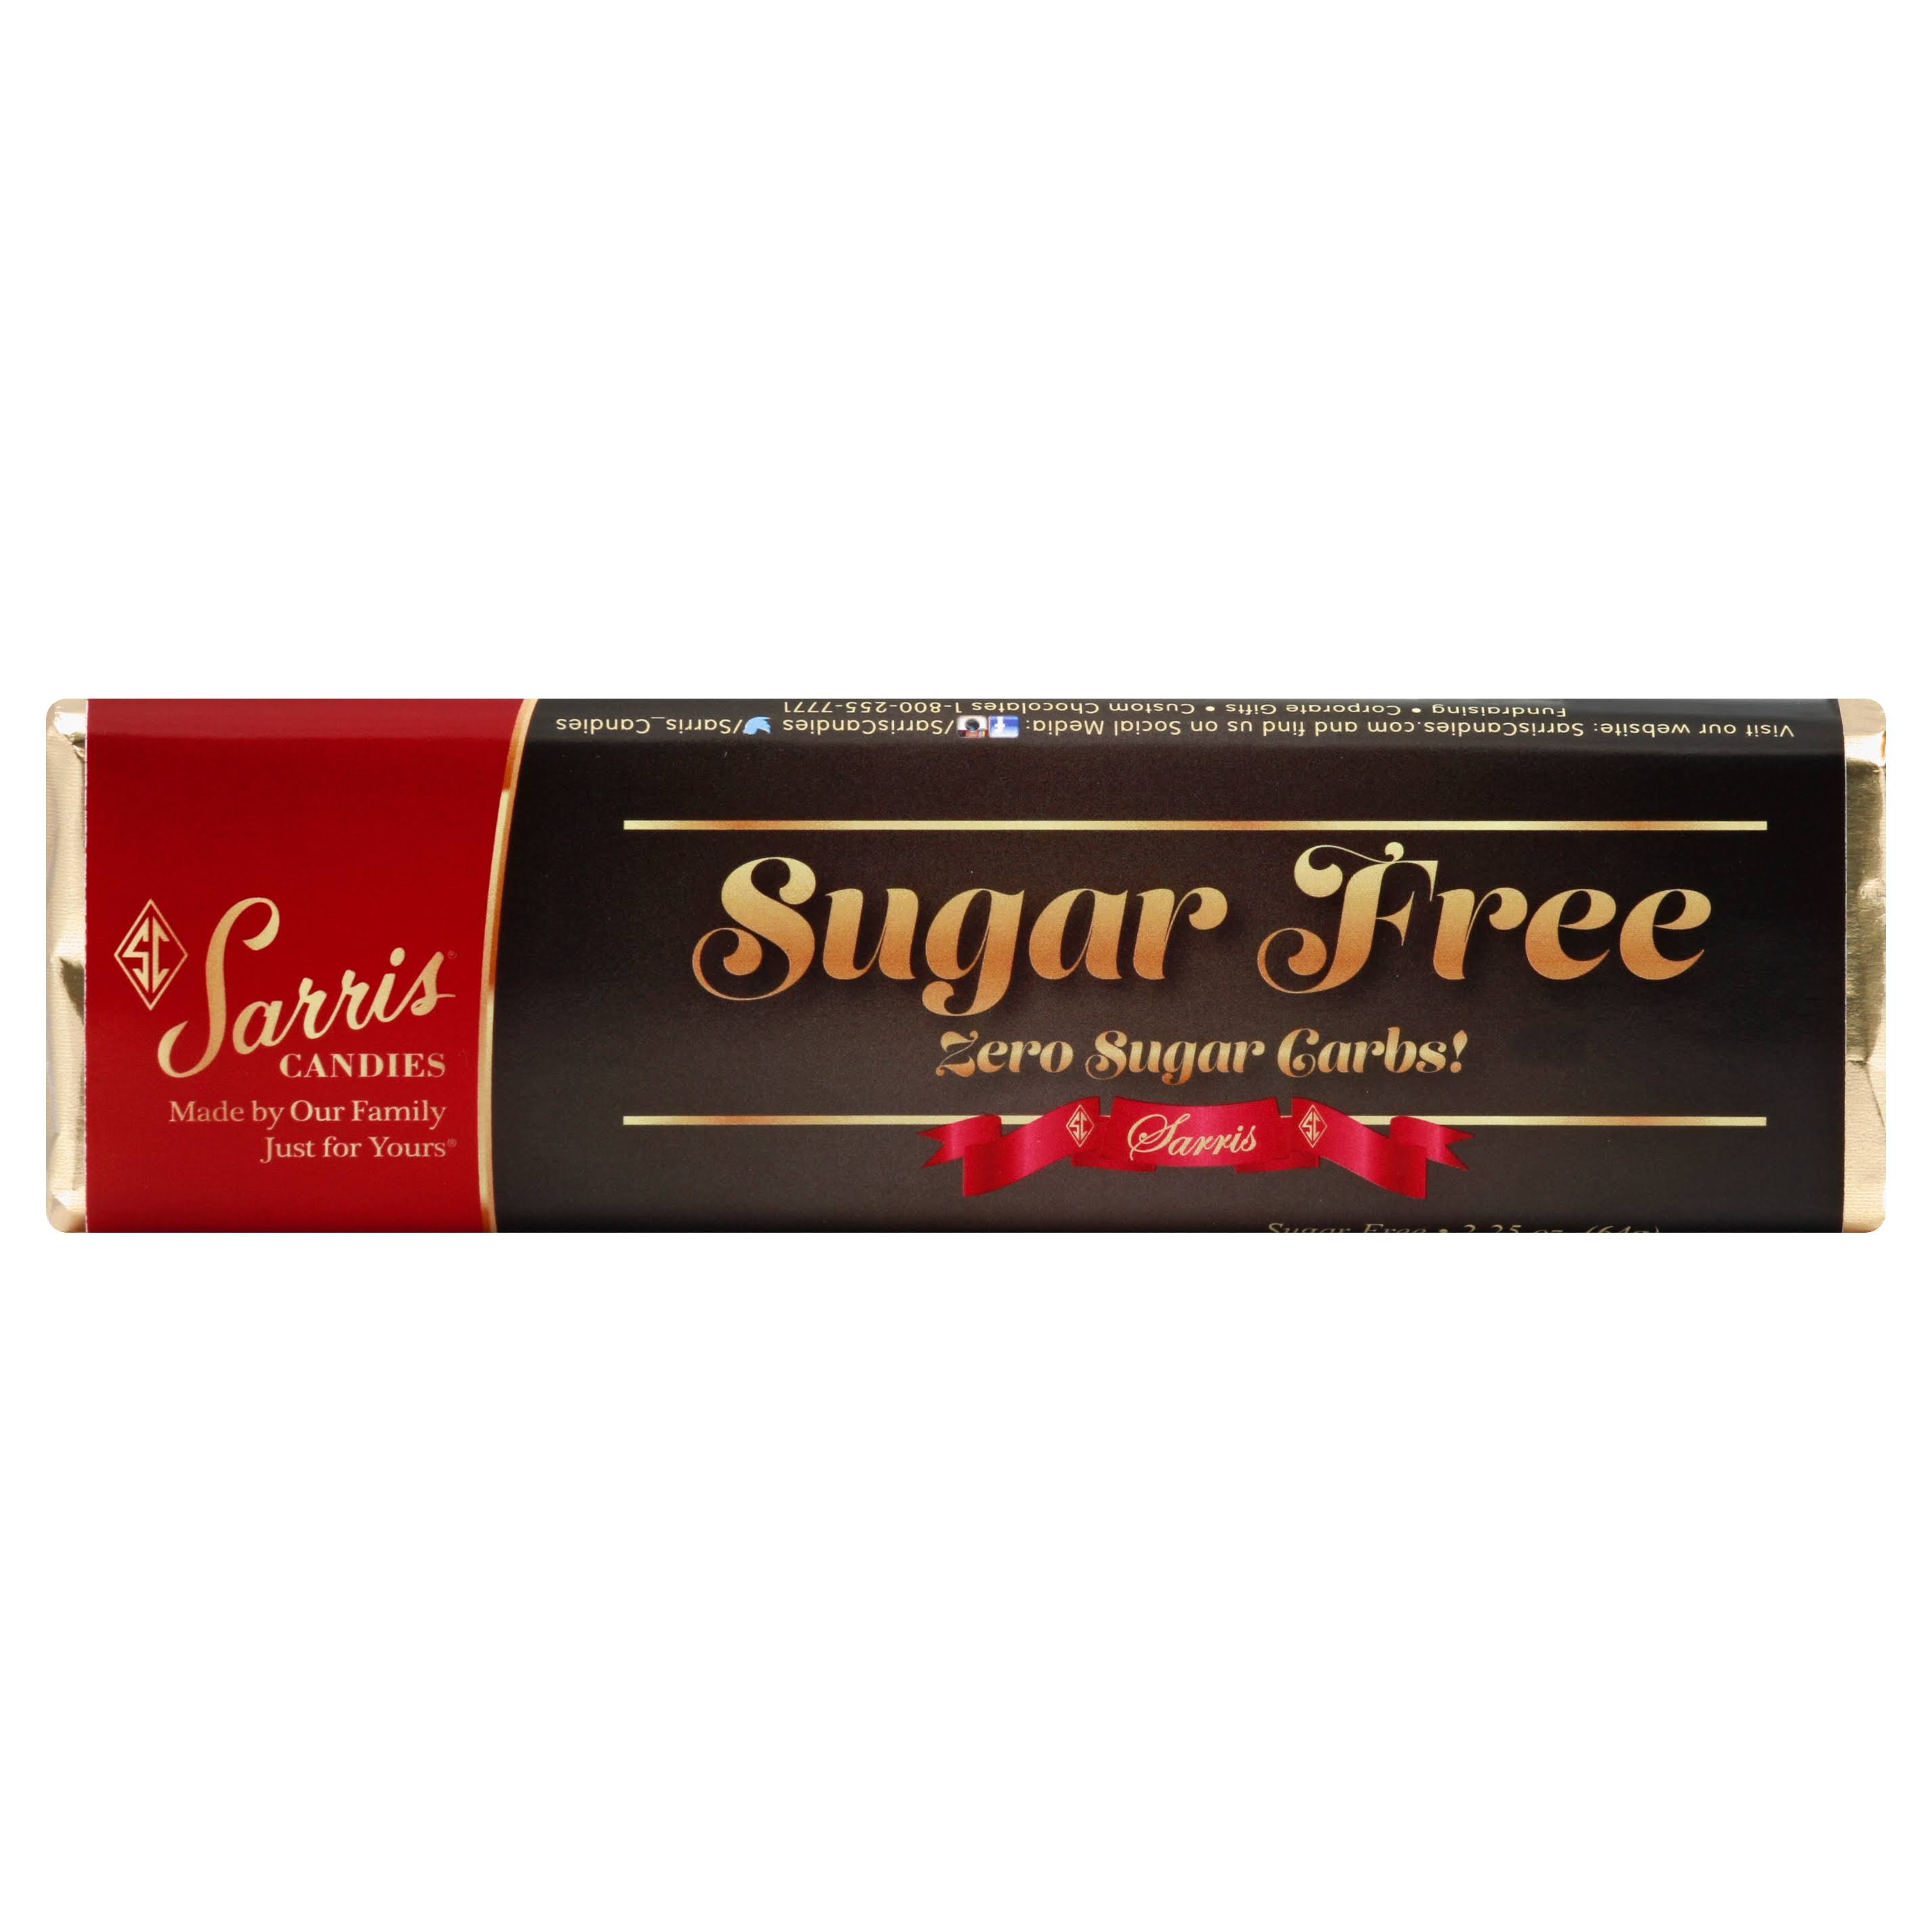 Sarris Candies Chocolate, Sugar Free - 2.25 (64 g)